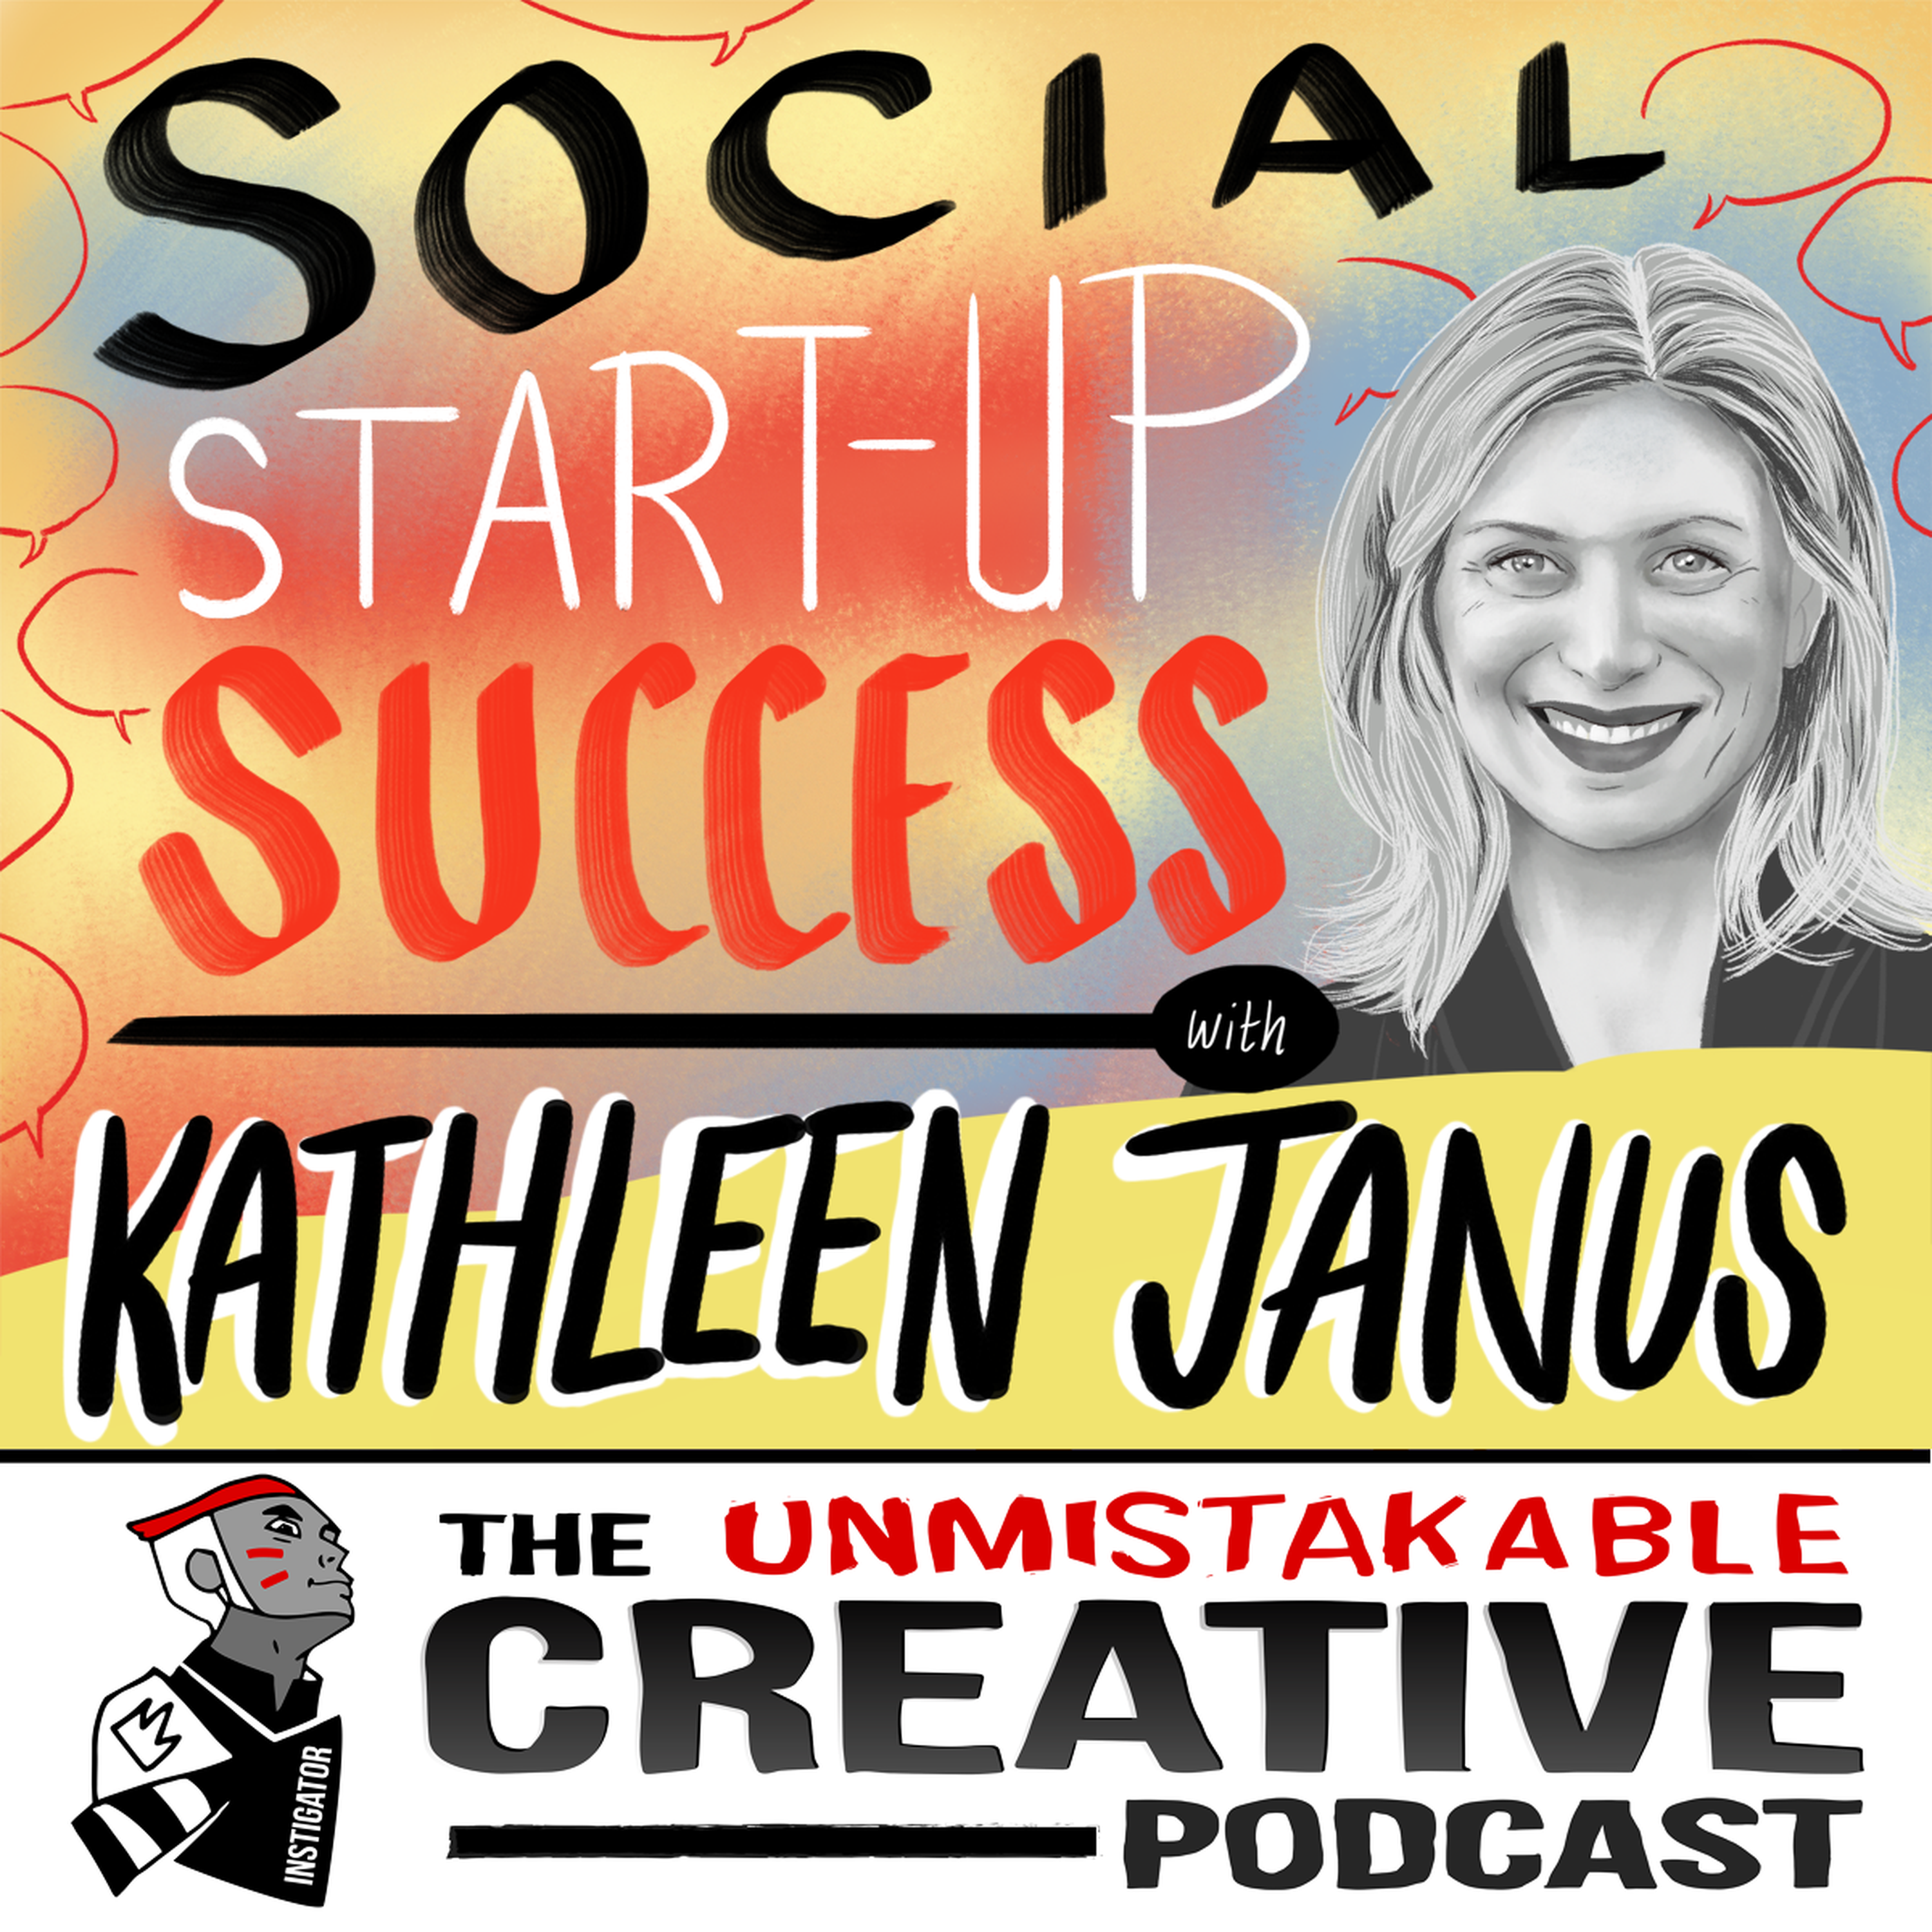 Kathleen Janus: Social Start-Up Success